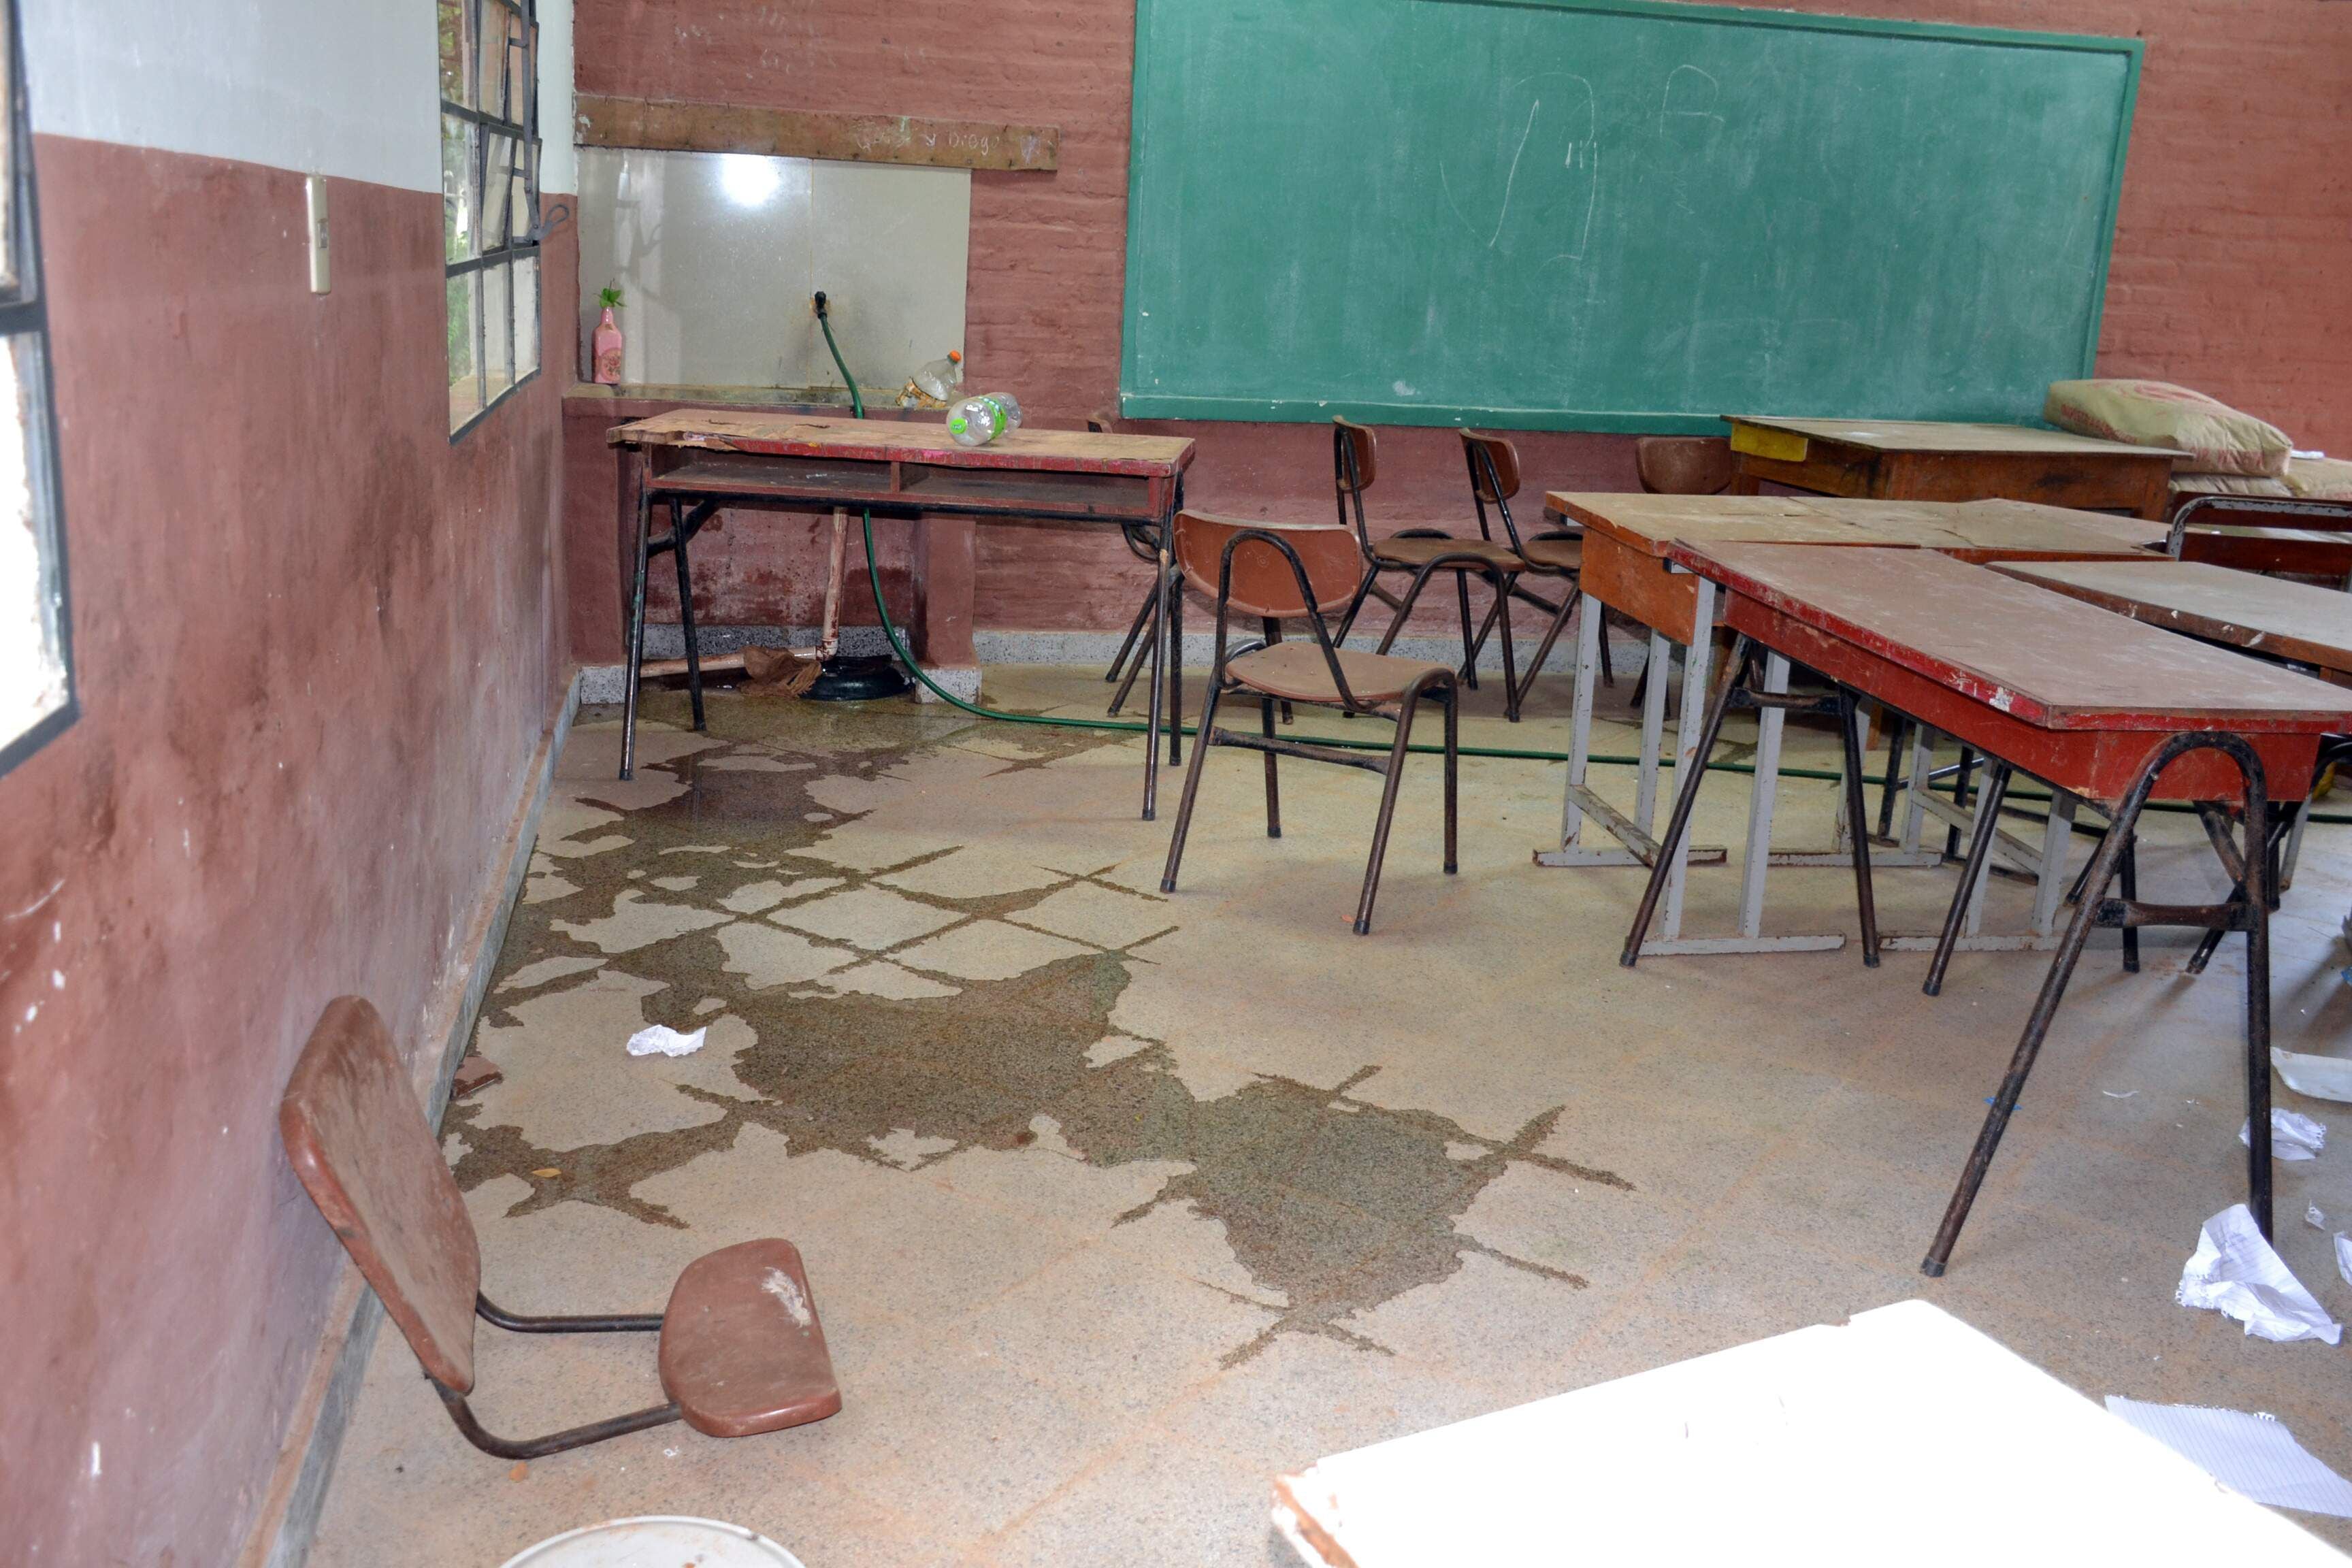 Silla rota tirada en el piso de la sala de clases que espera a los alumnos.